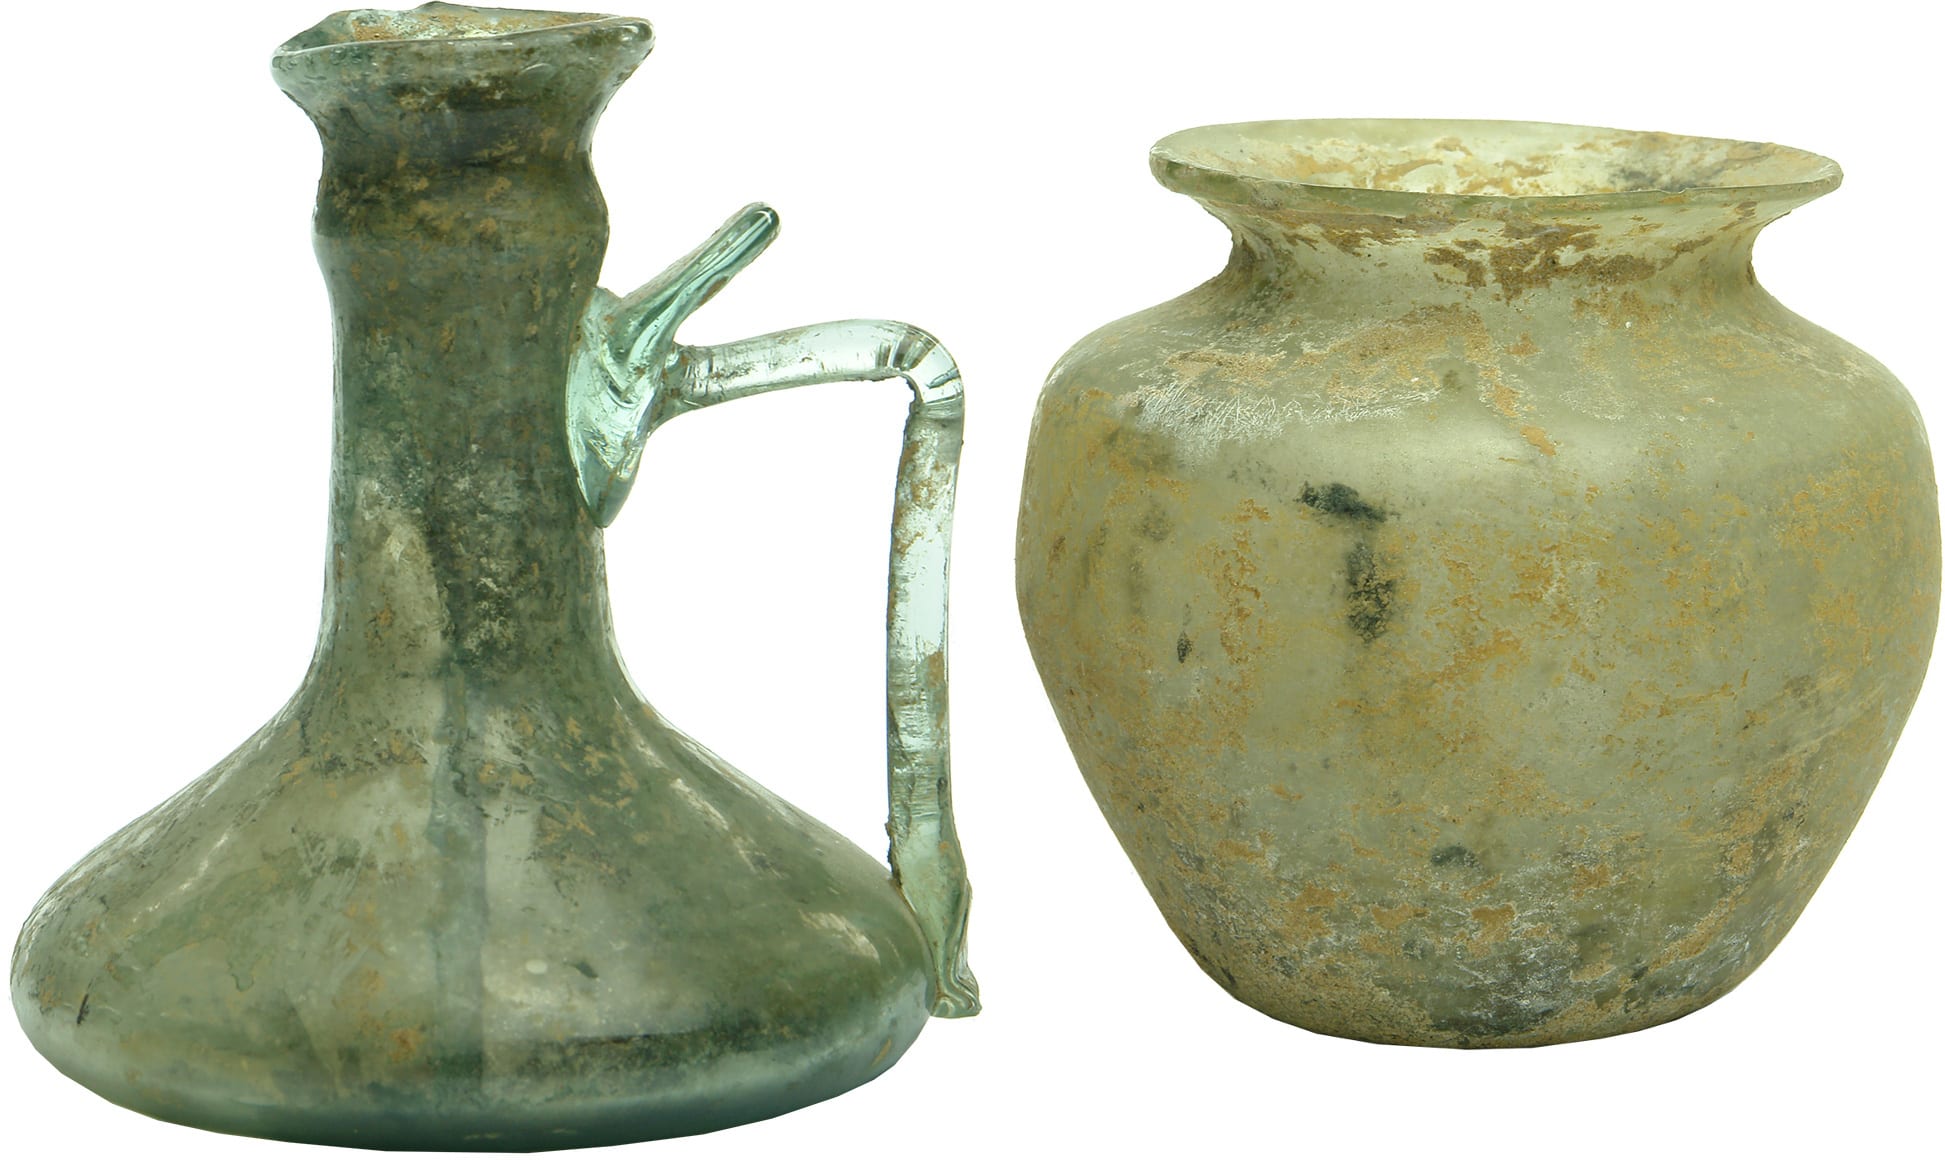 Roman type Antique Glass